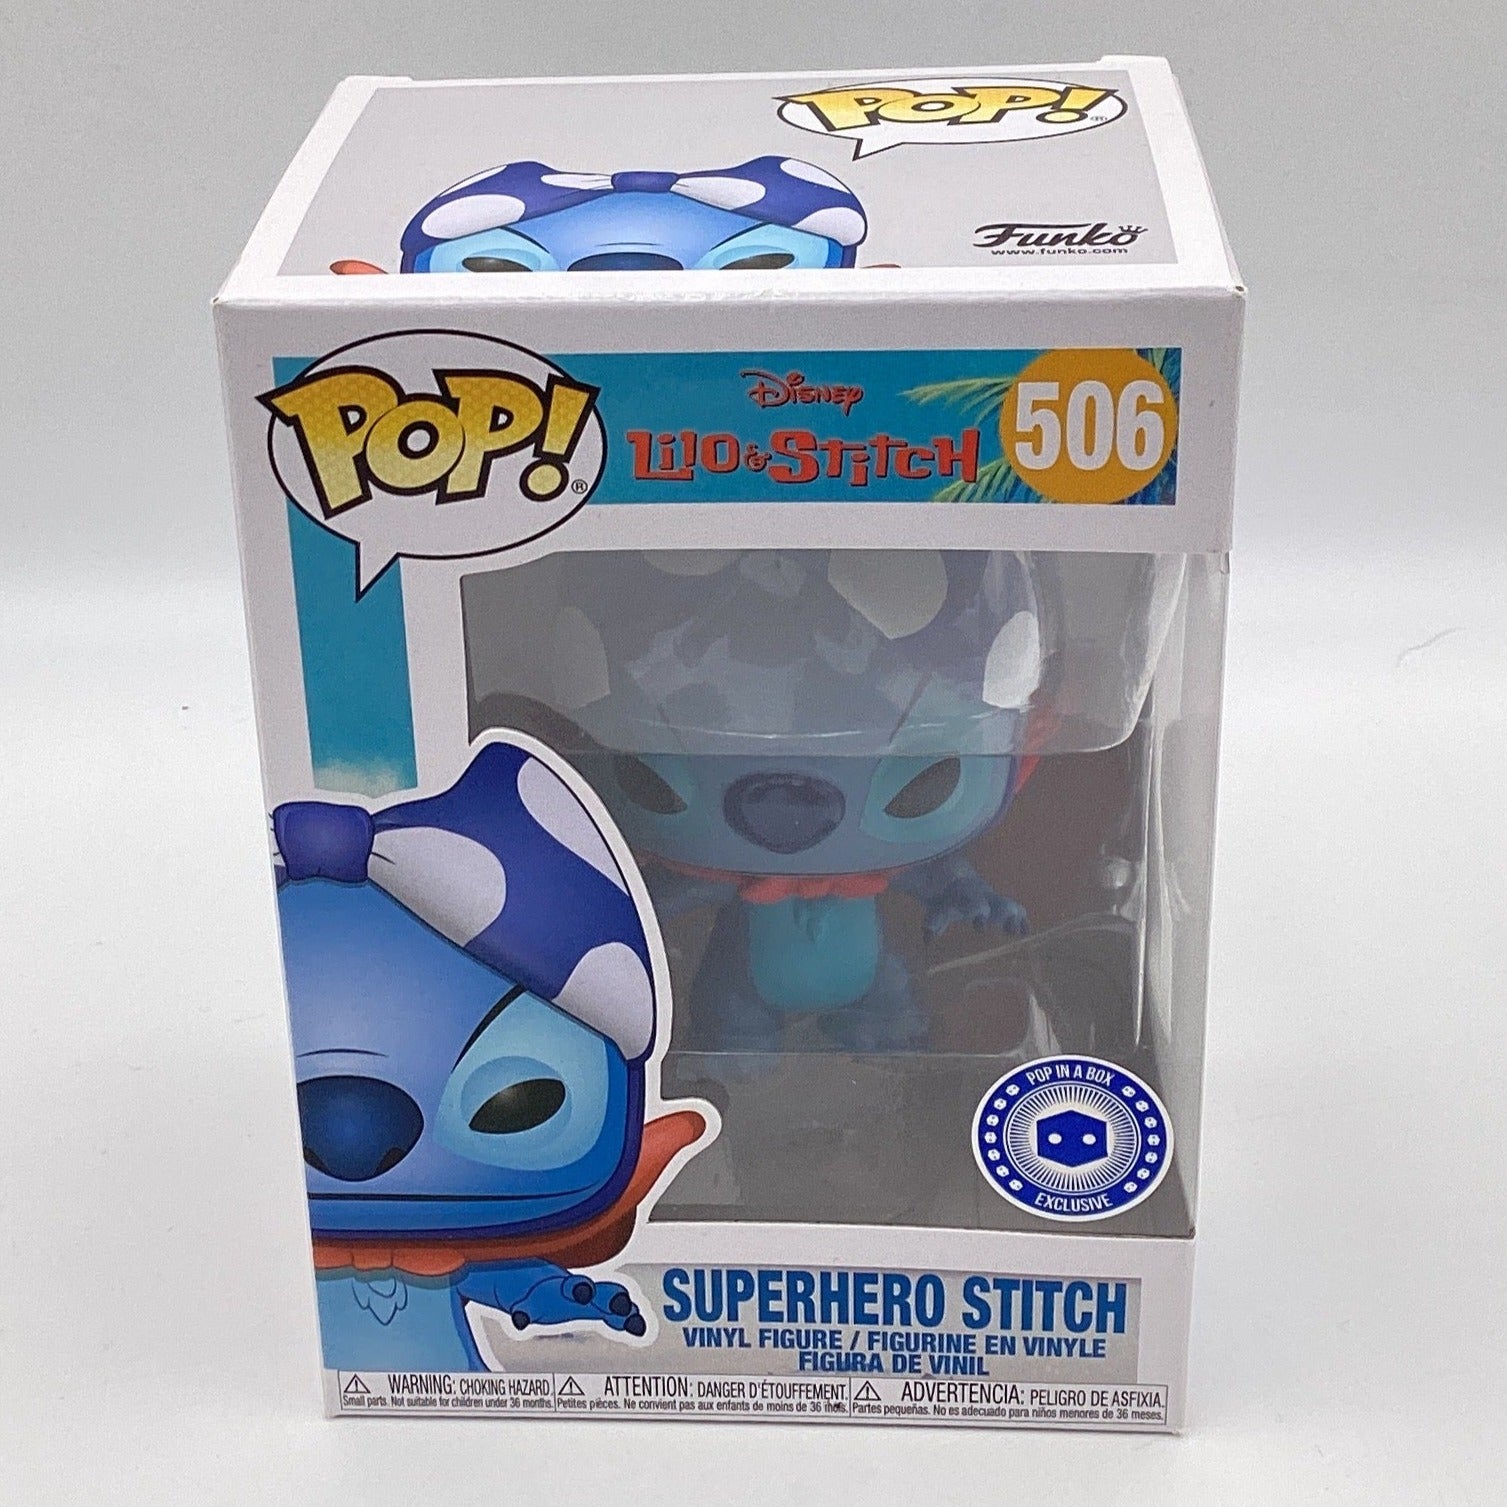 Lilo & Stitch - Superhero Stitch - POP! Disney action figure 506